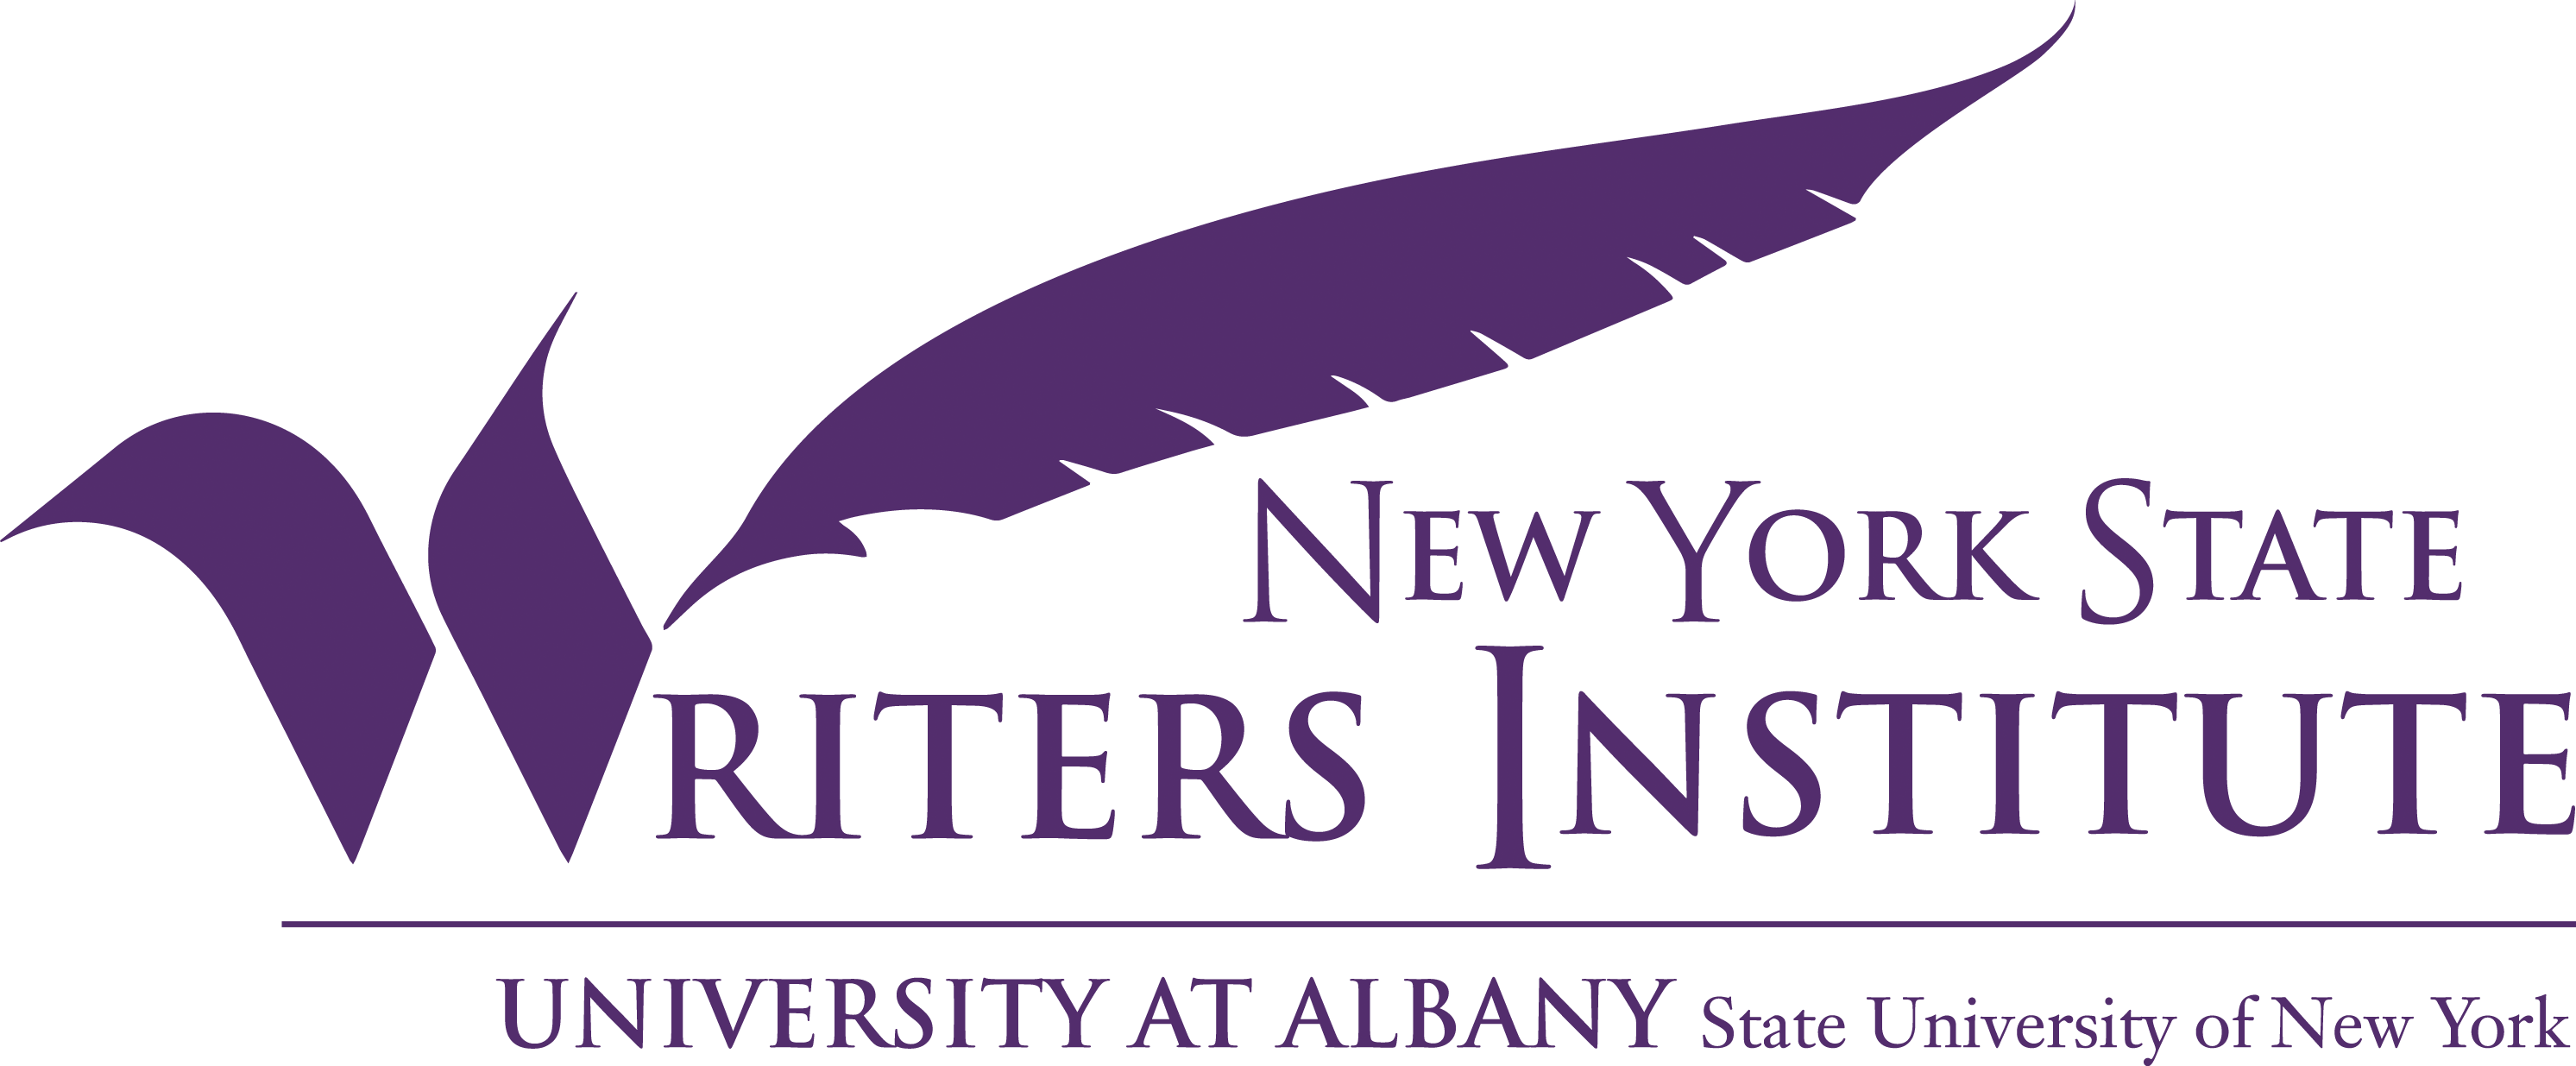 New York State Writers Institute logo